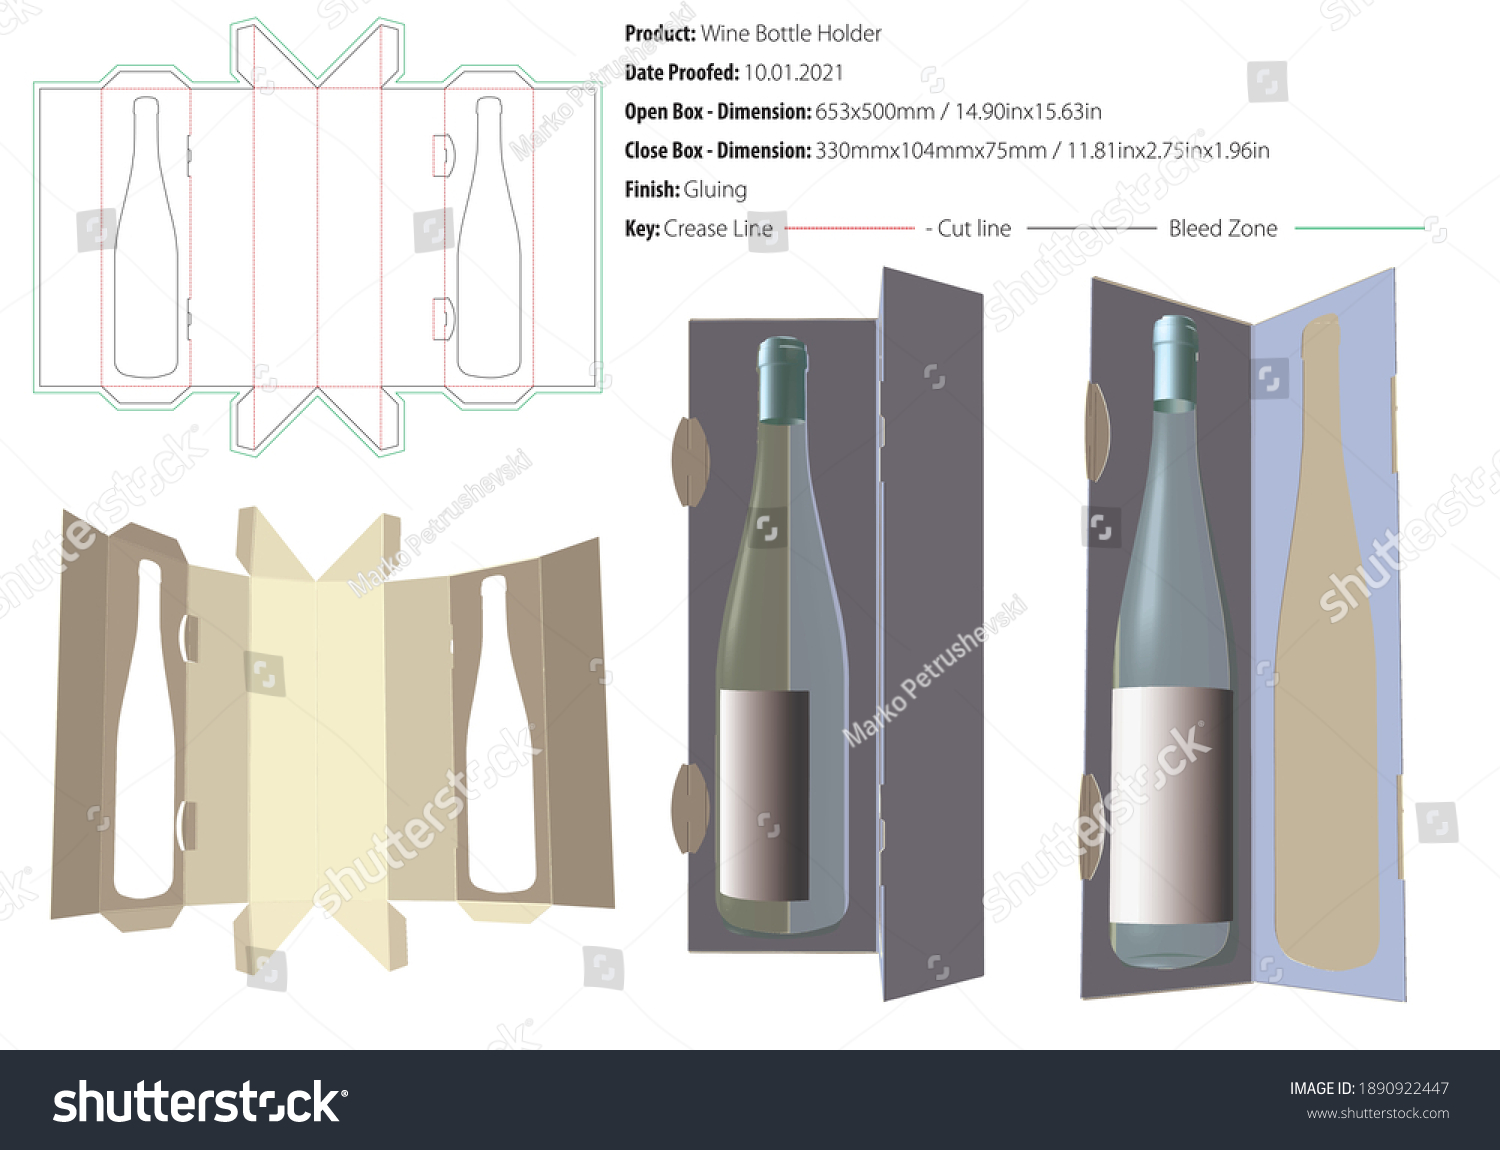 SVG of One bottle holder packaging design template gluing die cut - vector svg